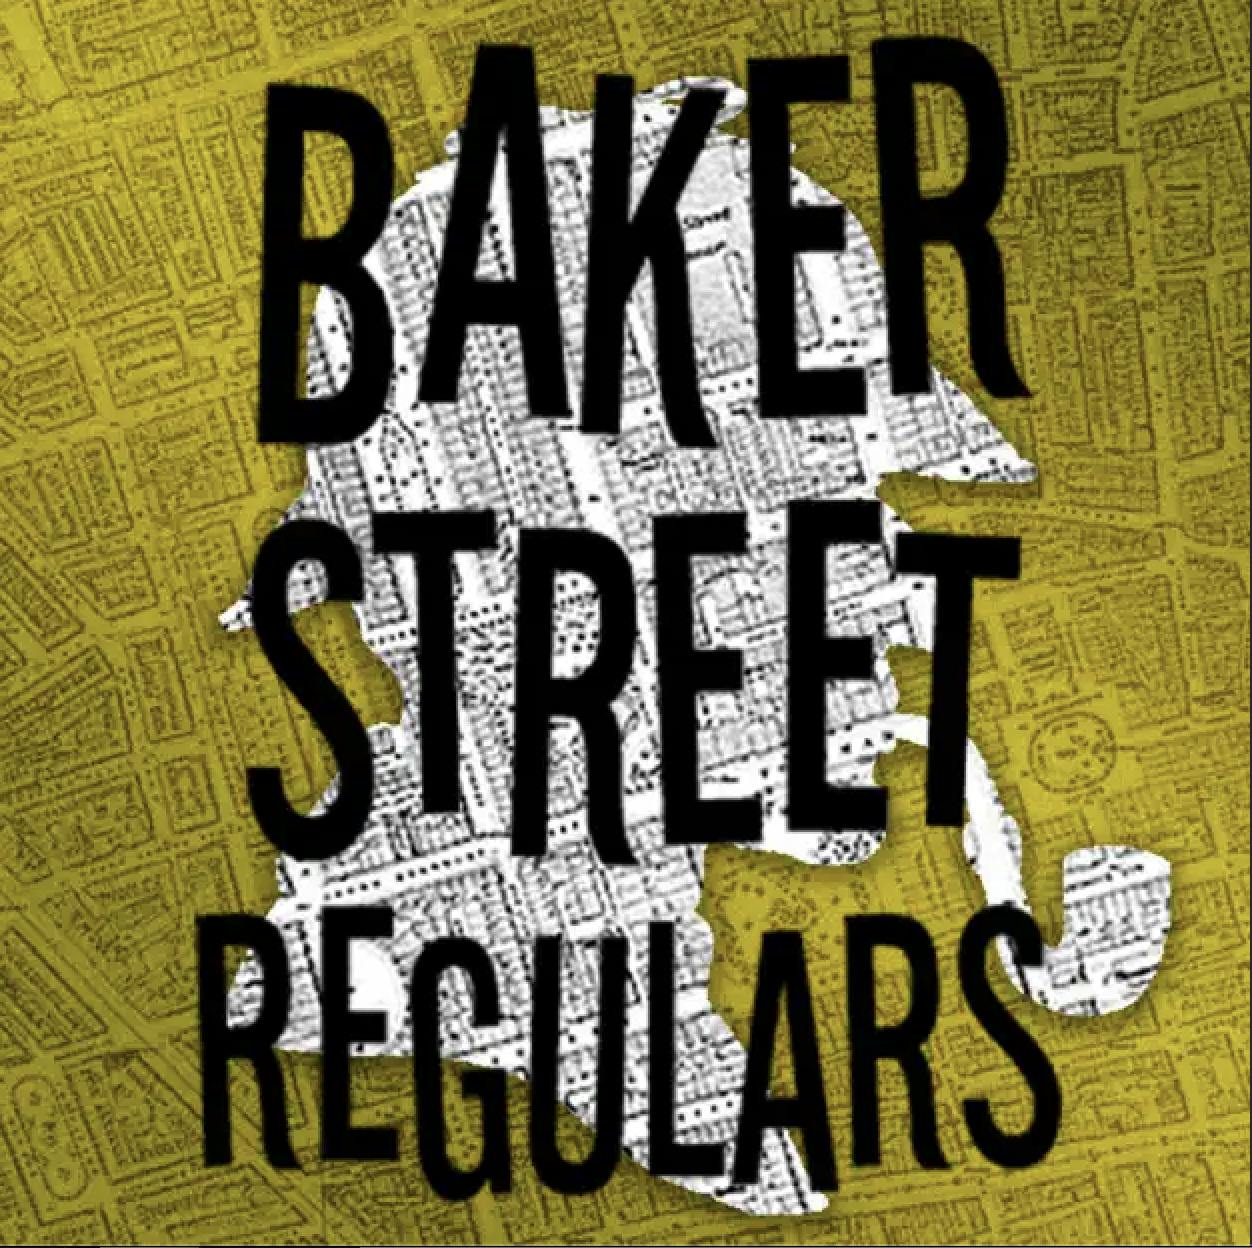 An Interview with the Baker Street Regulars!